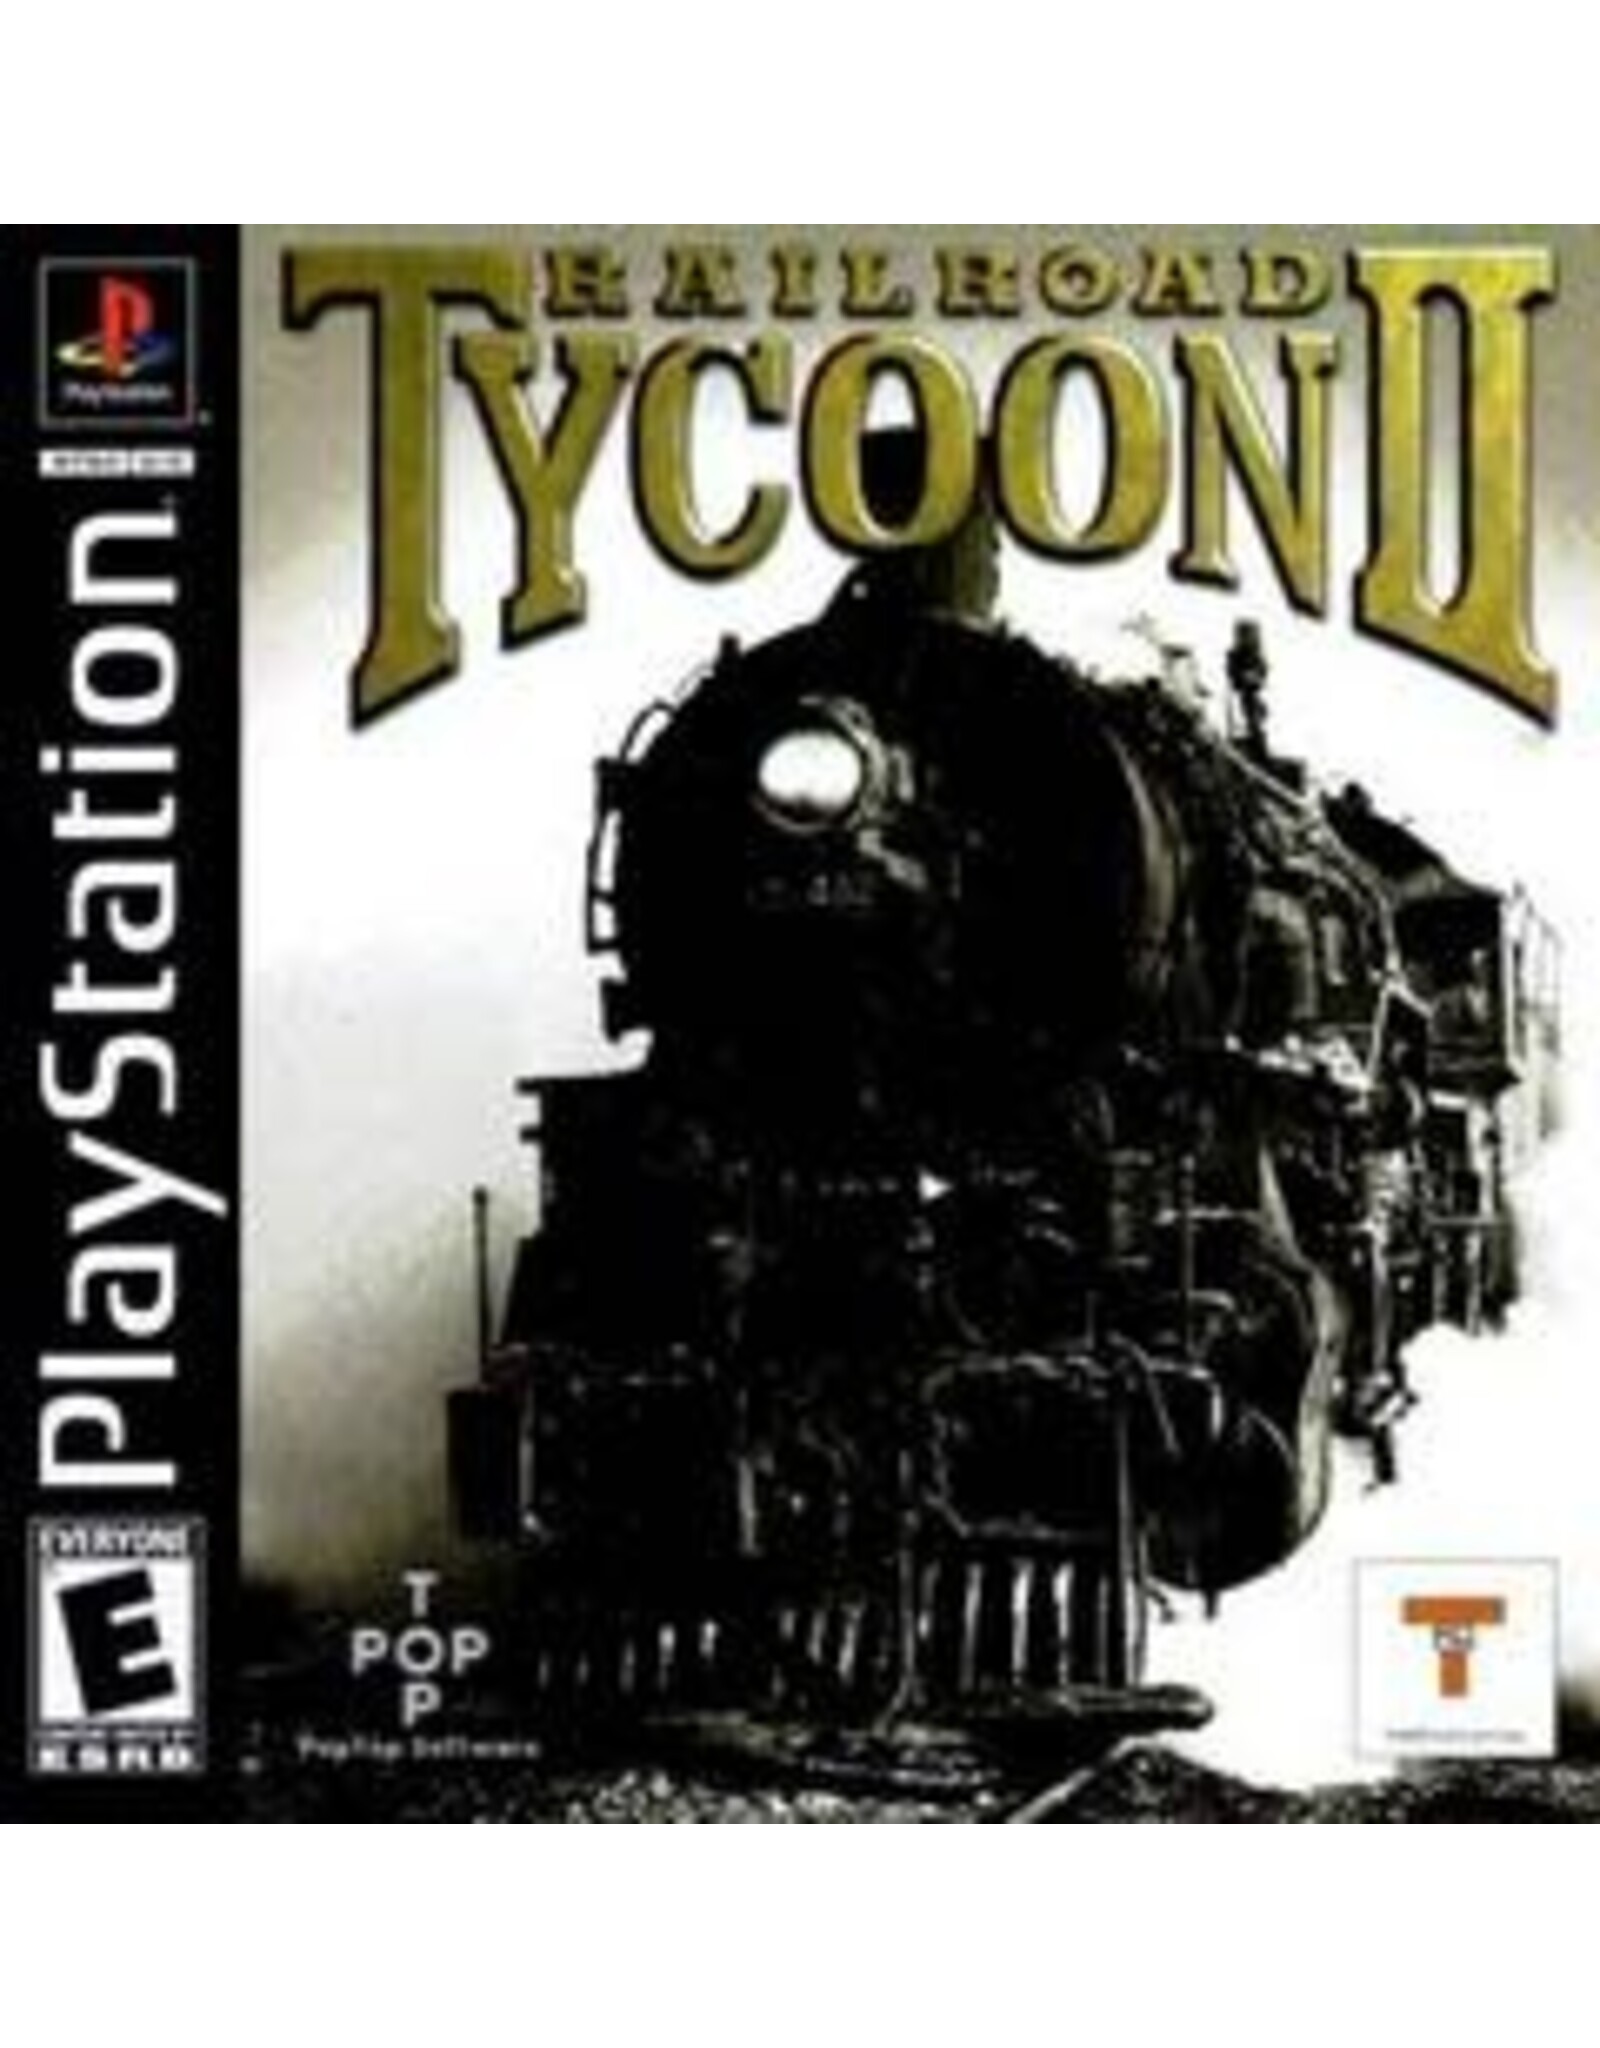 Playstation Railroad Tycoon II (CiB with Registration Card, Lightly Damaged Manual)